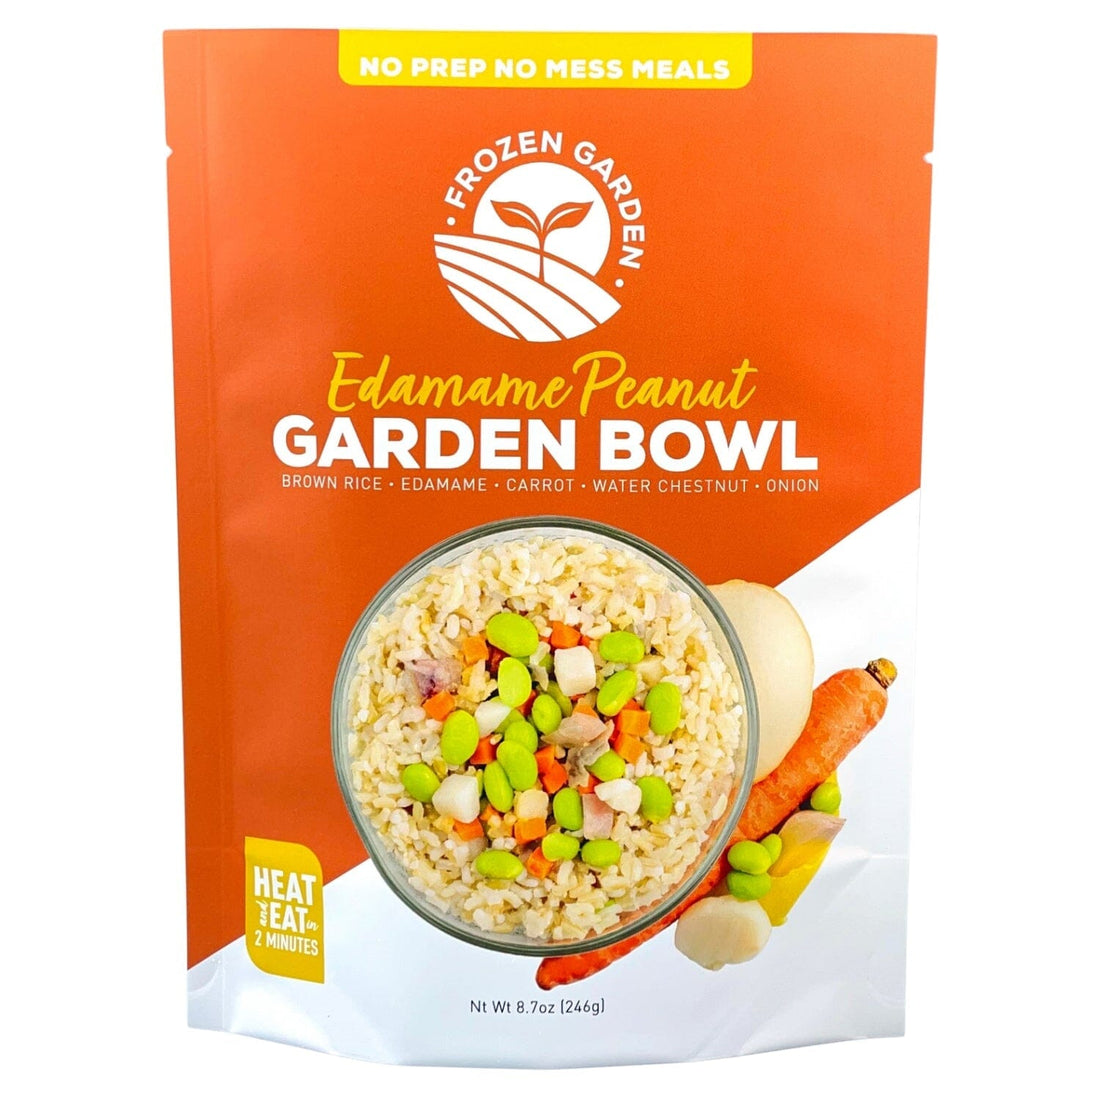 Edamame Peanut Garden Bowl - Frozen Garden - vegan protein bowl - healthy meal bowls